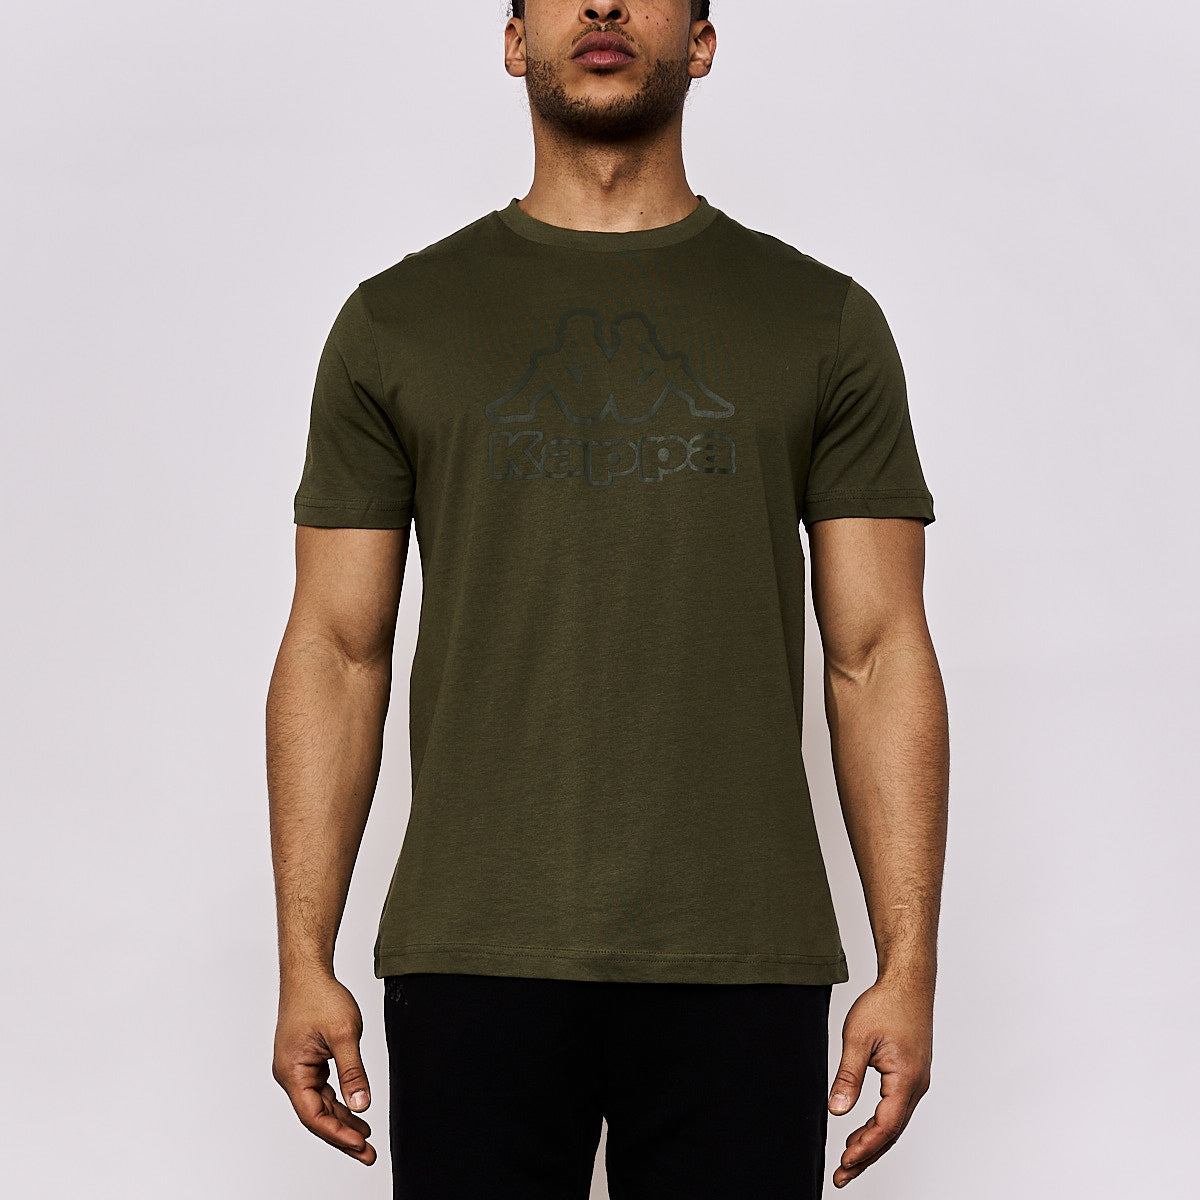 T-shirt Cremy Vert Homme